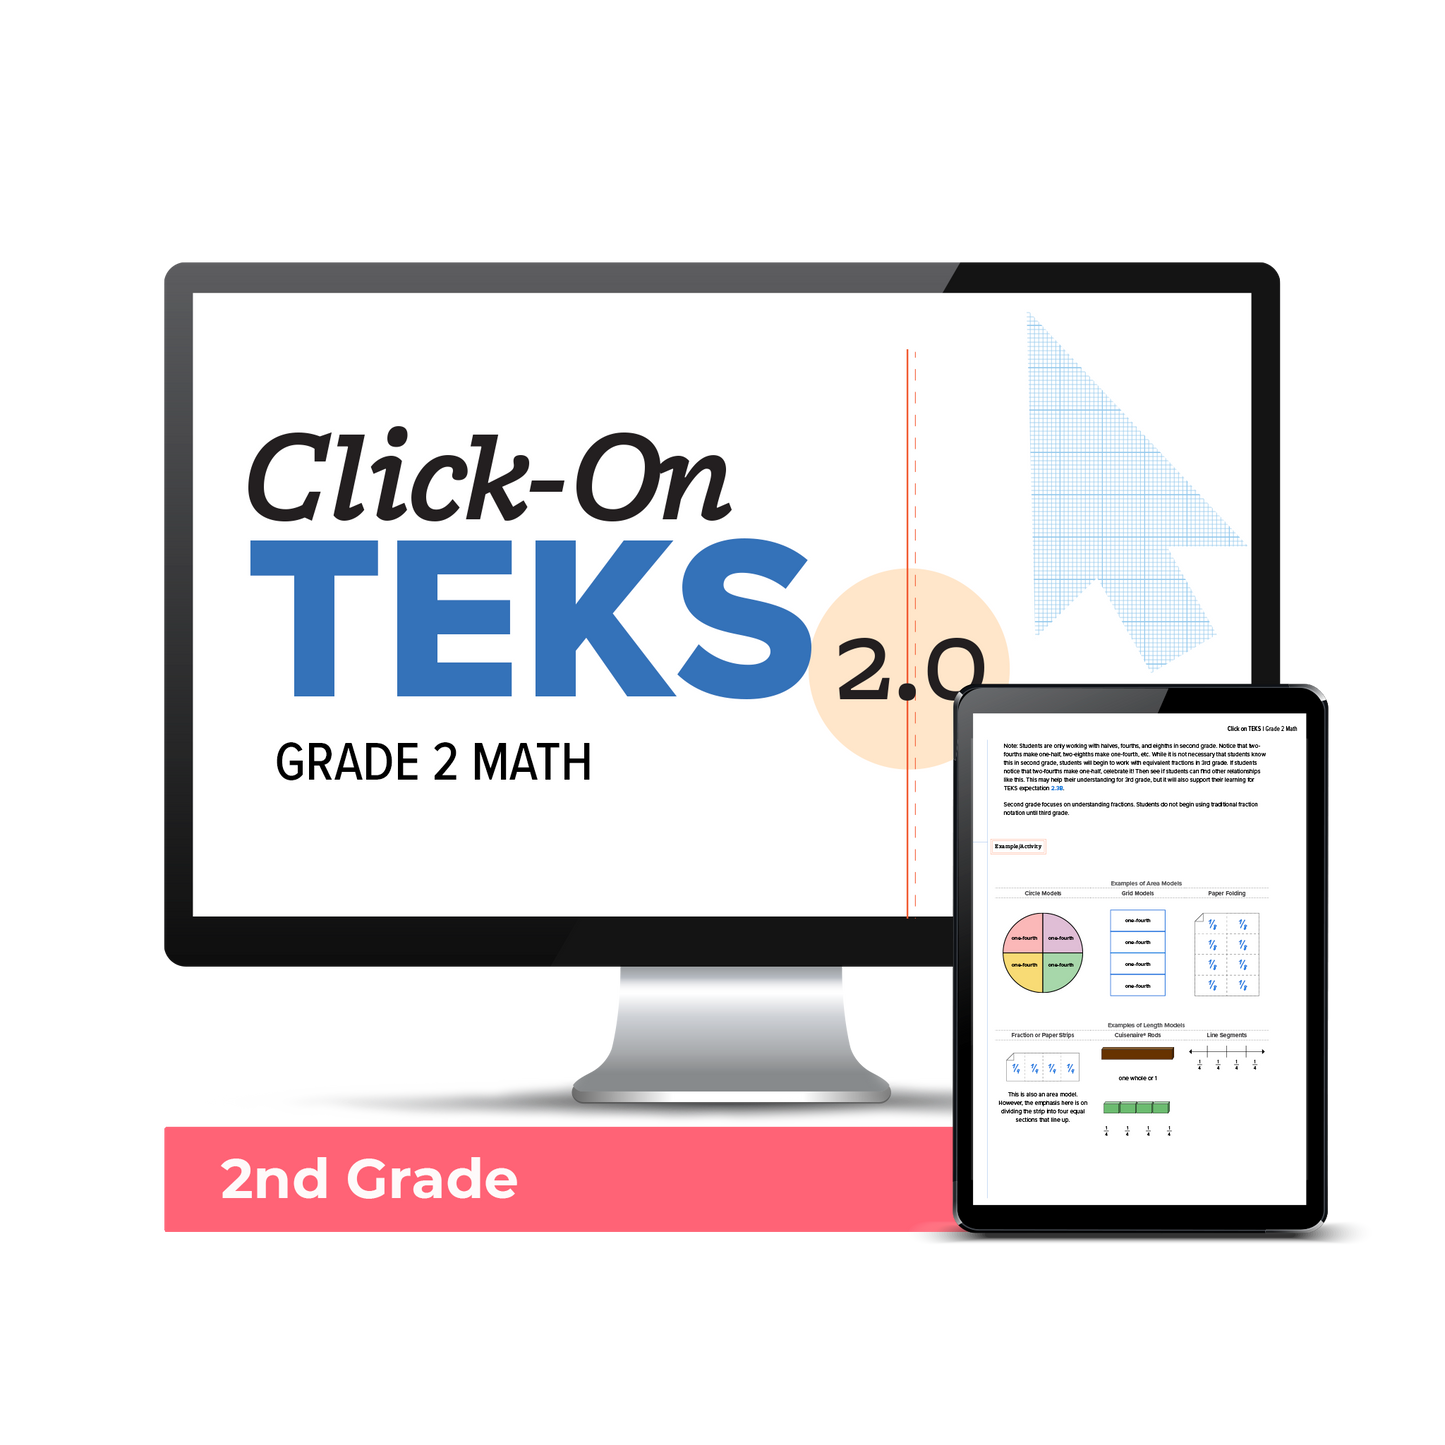 Click-On TEKS 2.0: Grade 2 Math (Downloadable PDF)